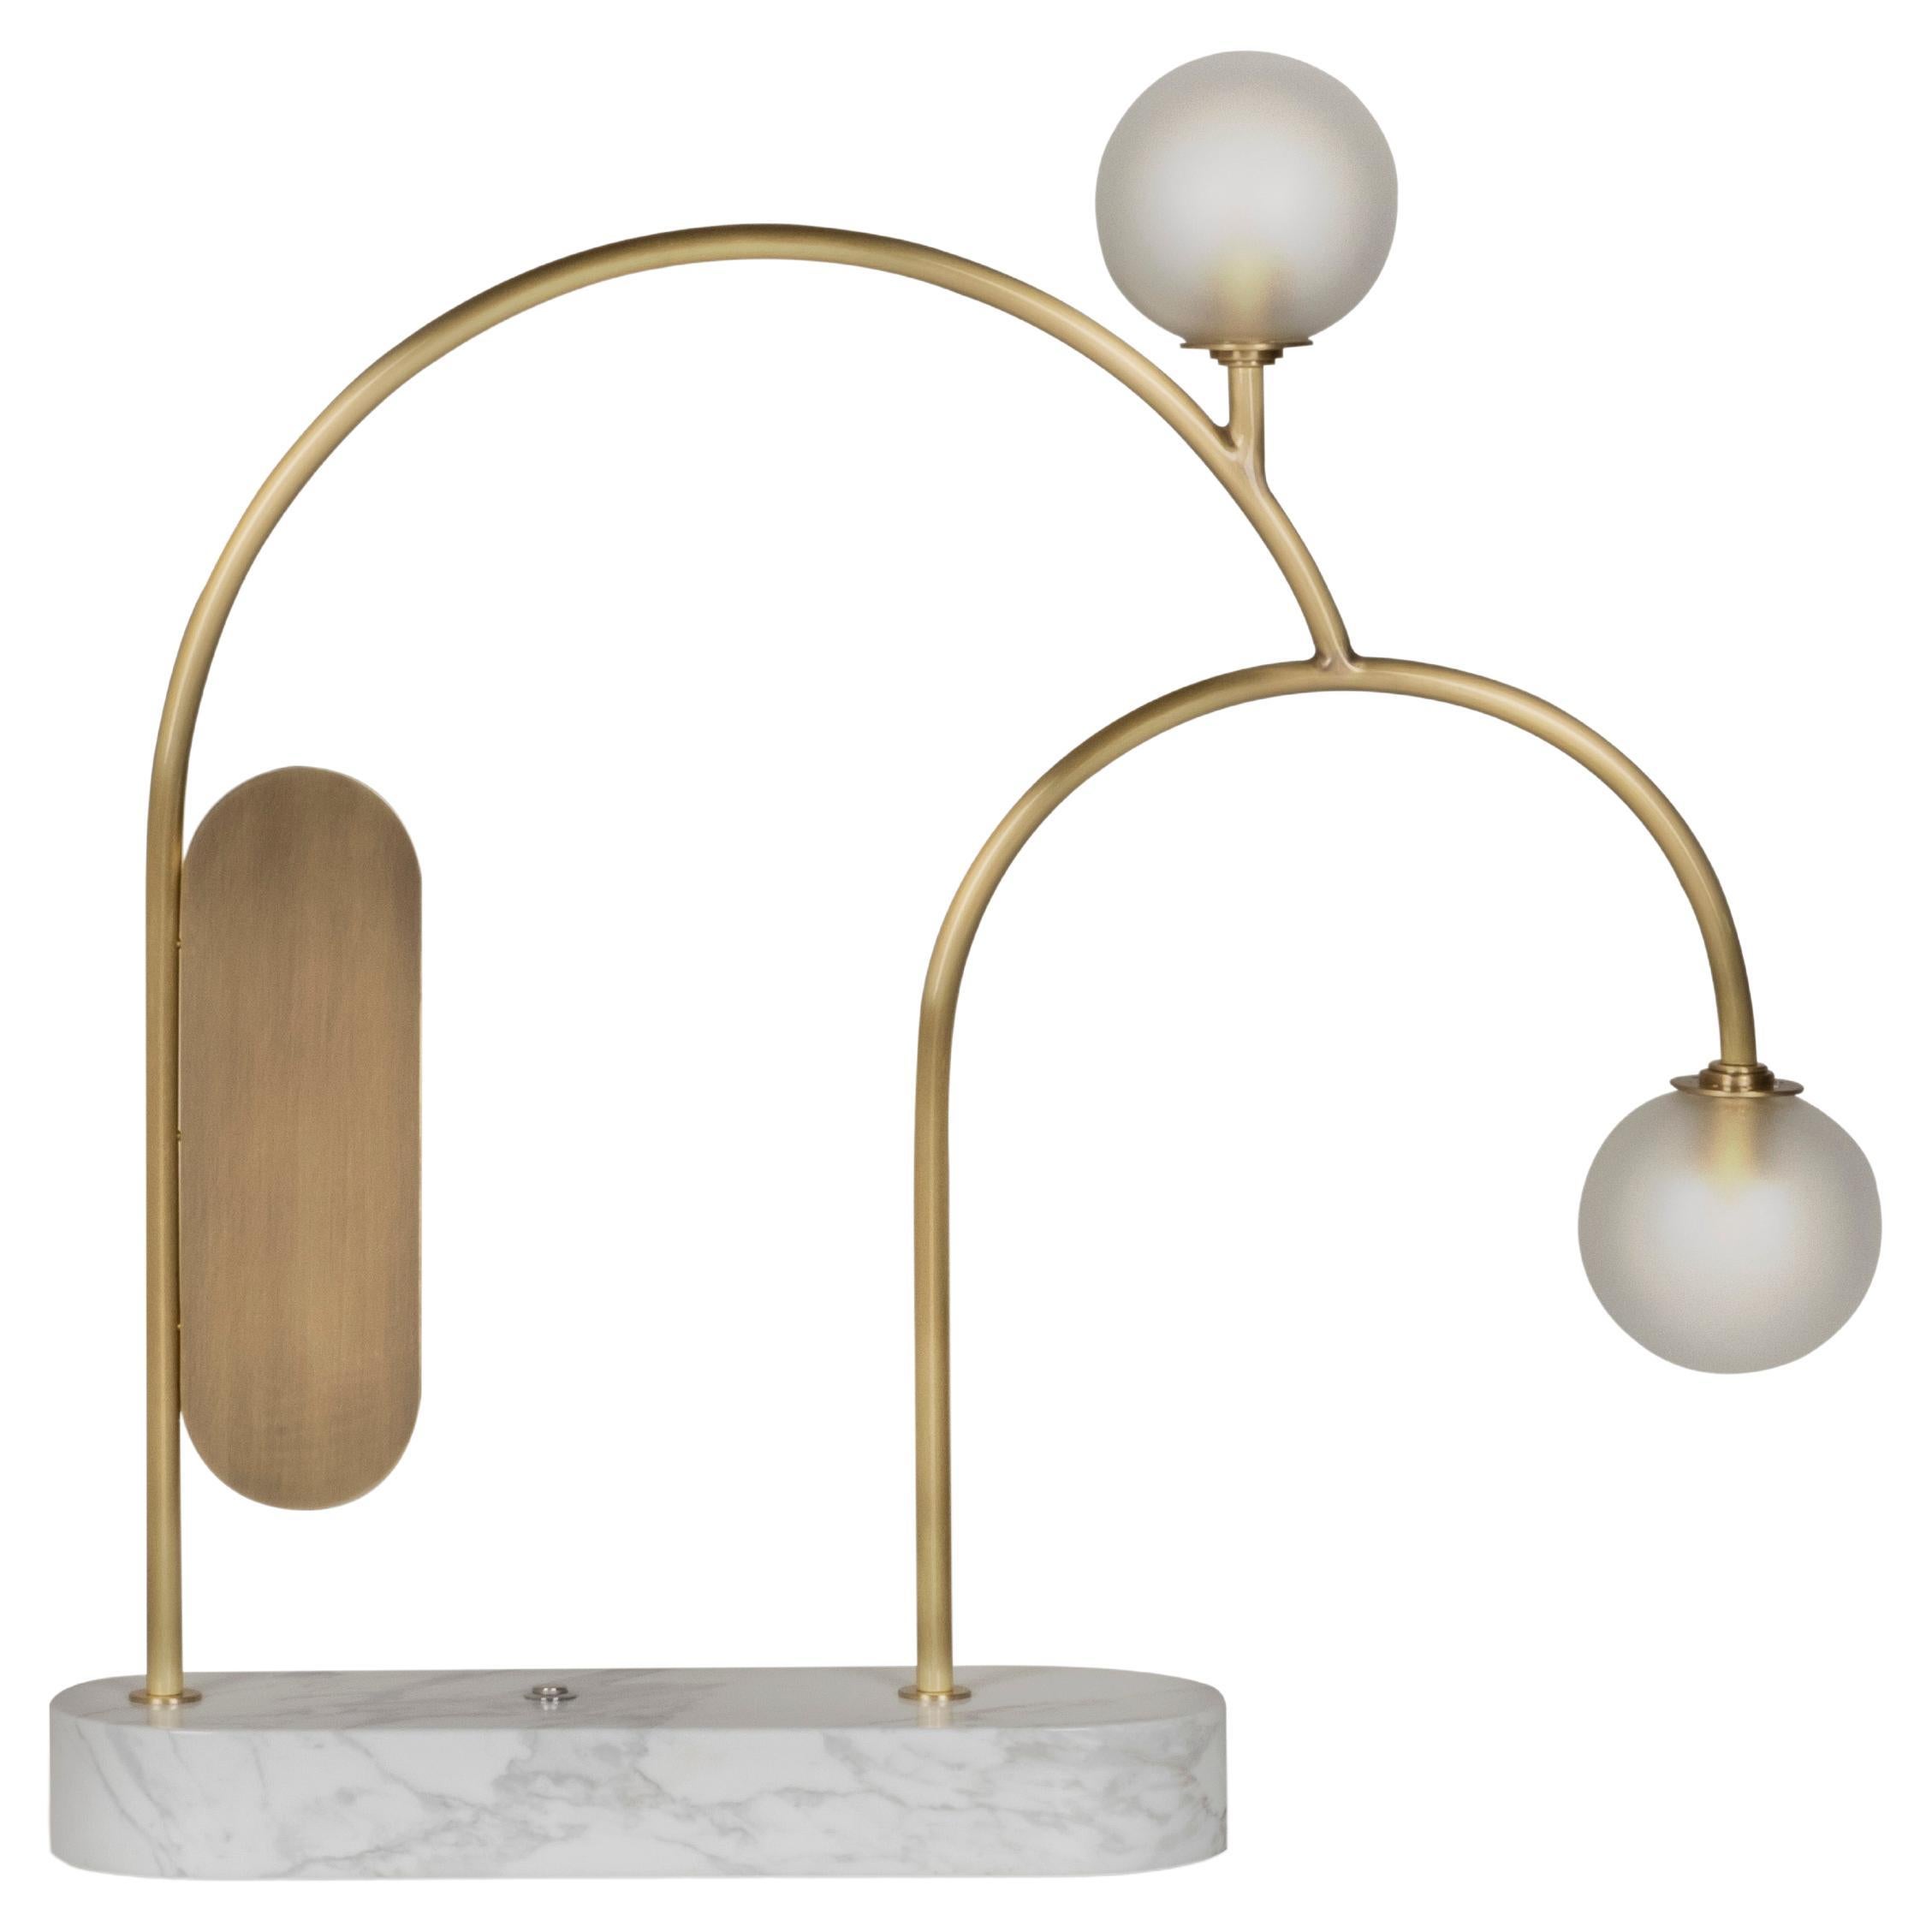 Greenapple Table Lamp, Two Table Lamp, Statuario Marble, Handmade in Portugal